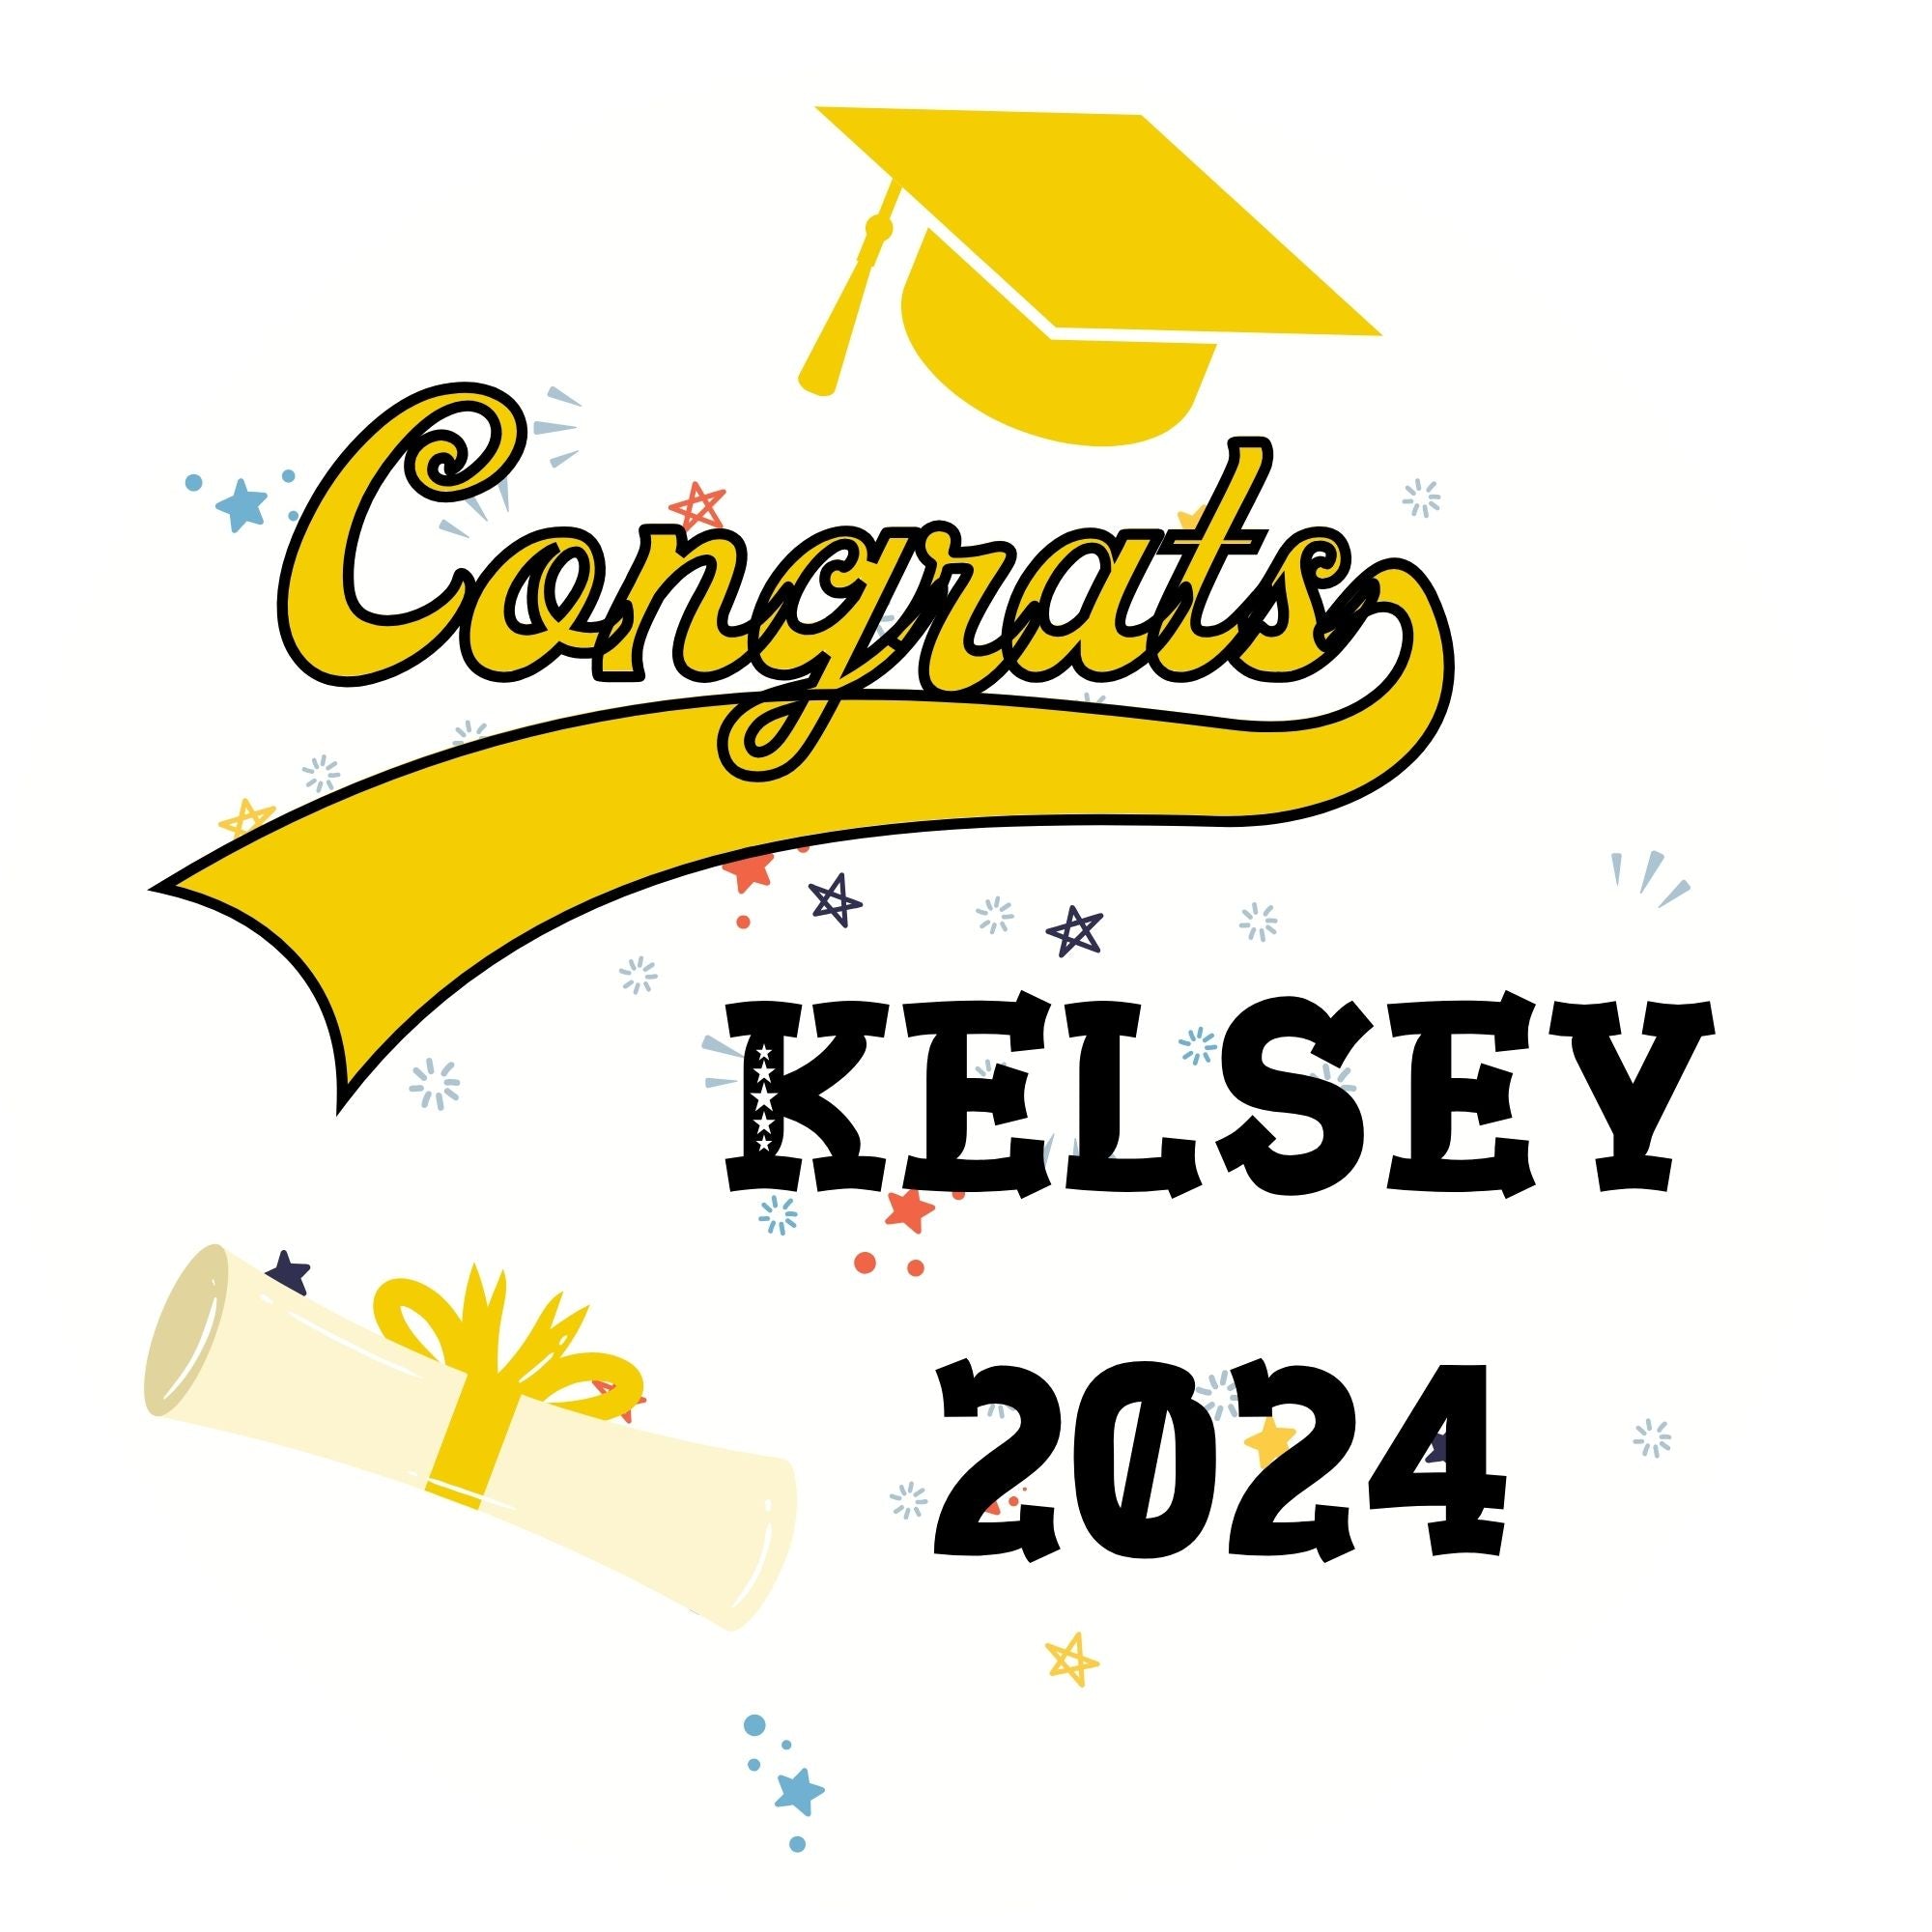 Personalized Grad Party Sticker Bundle - Varsity Congrats